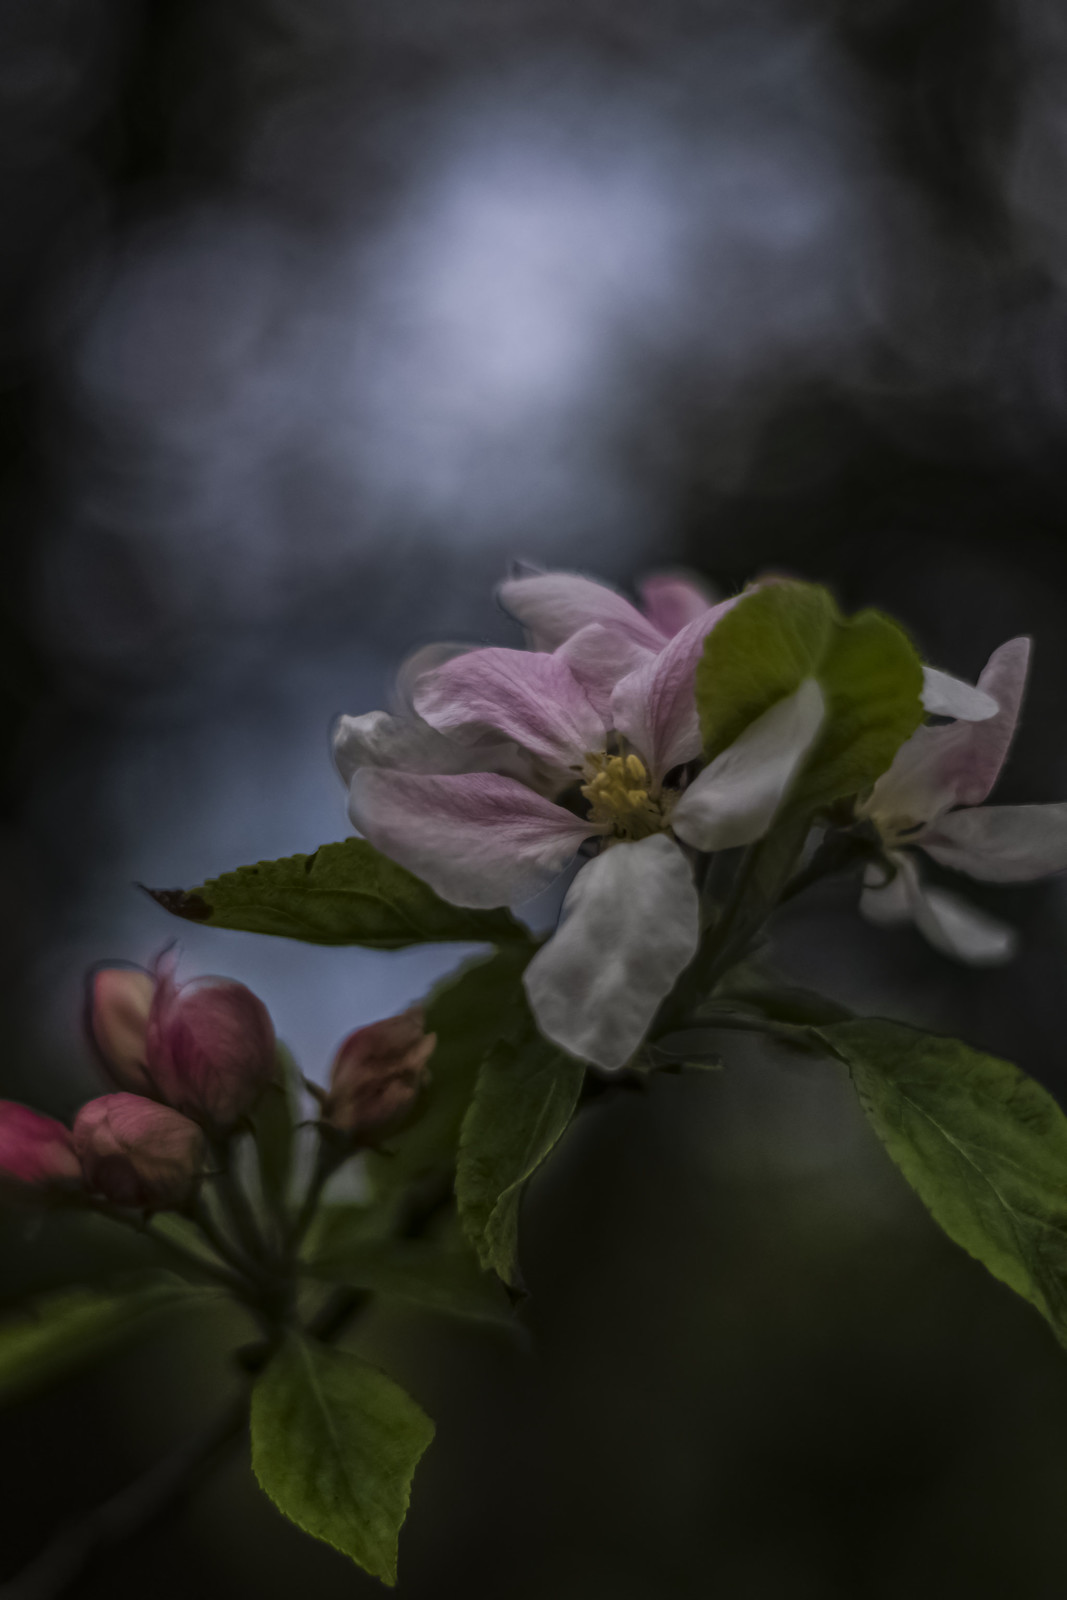 Apple Blossom Time